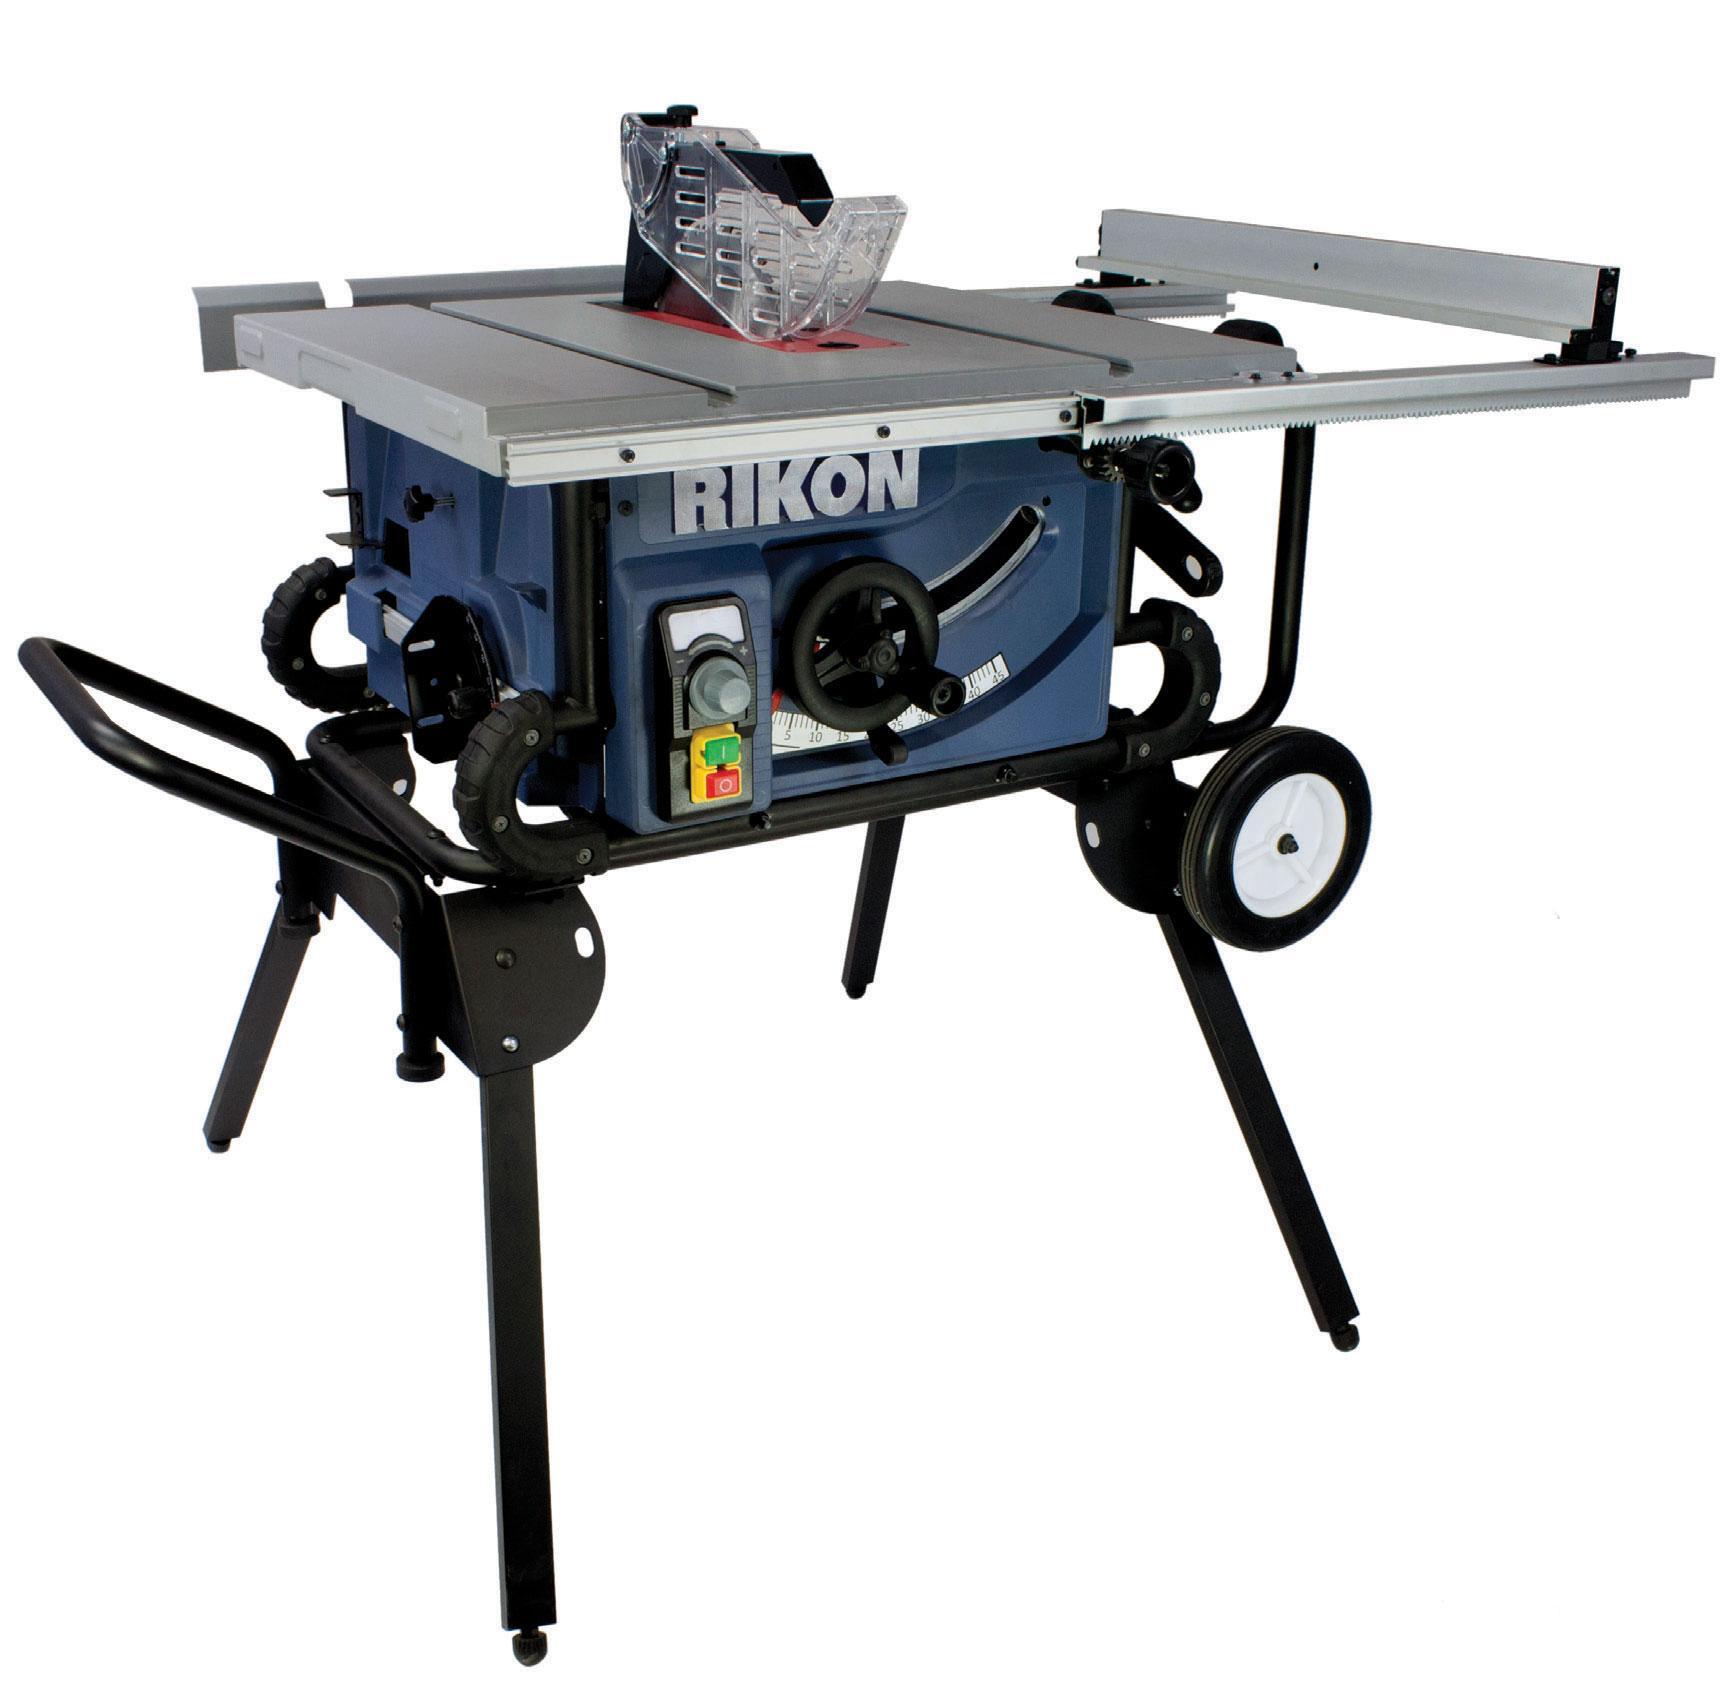 Model 11-600S: 10Ã¢â¬ Portable Table Saw with Stand